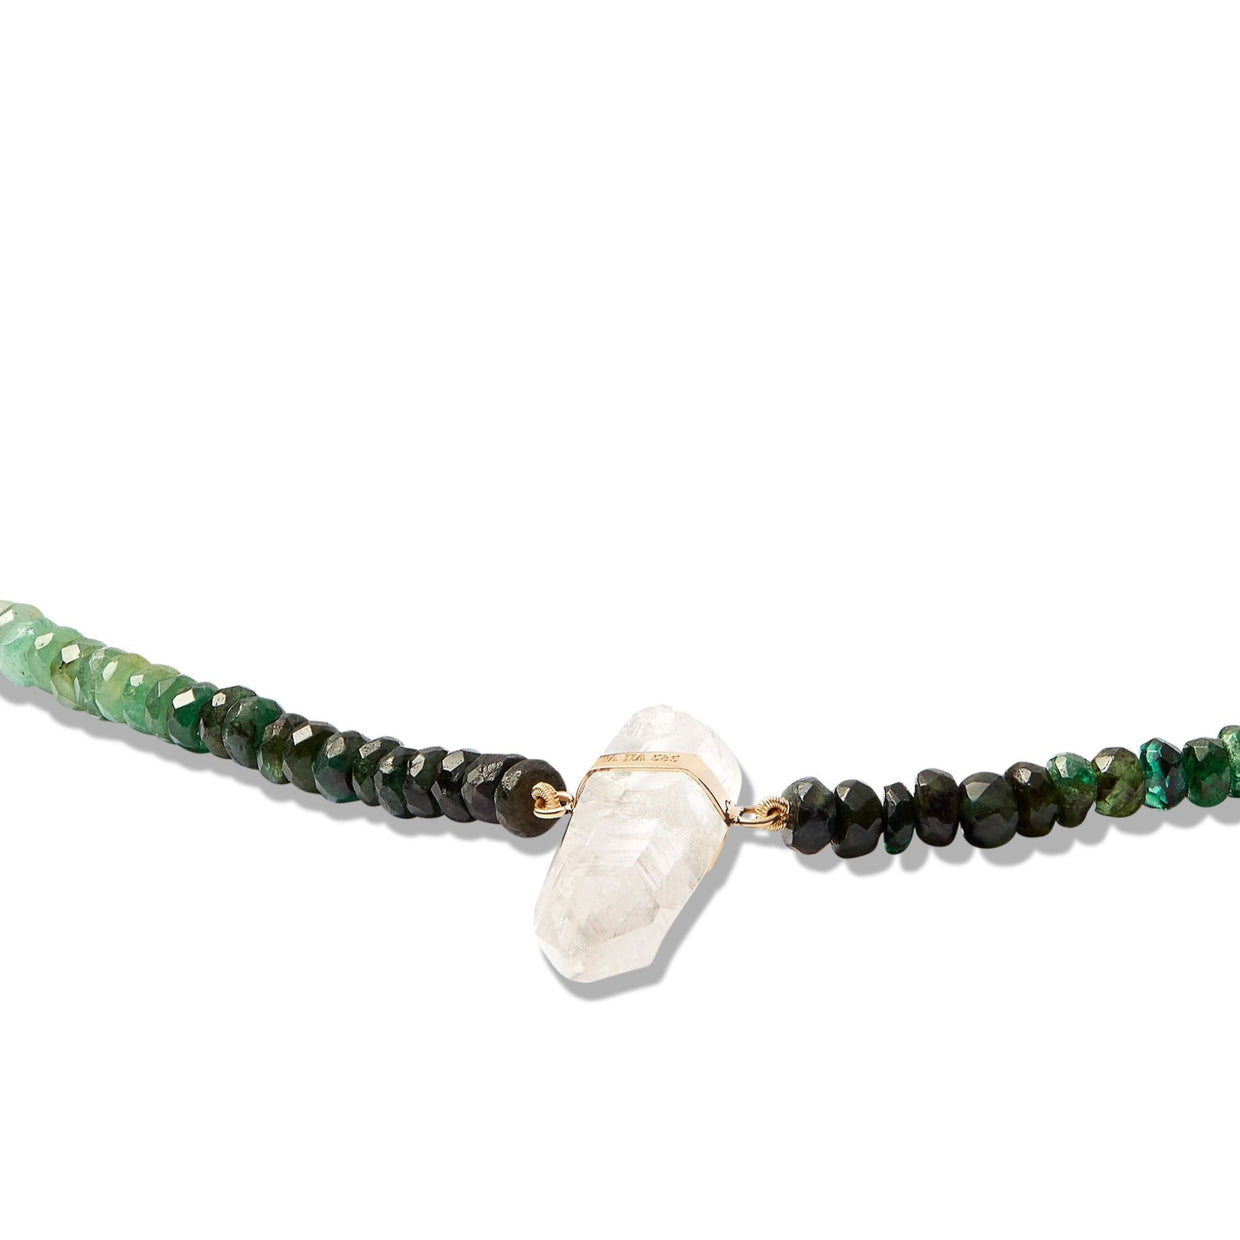 Arizona Ombre Emerald With Crystal Quartz Gold Bar Necklace